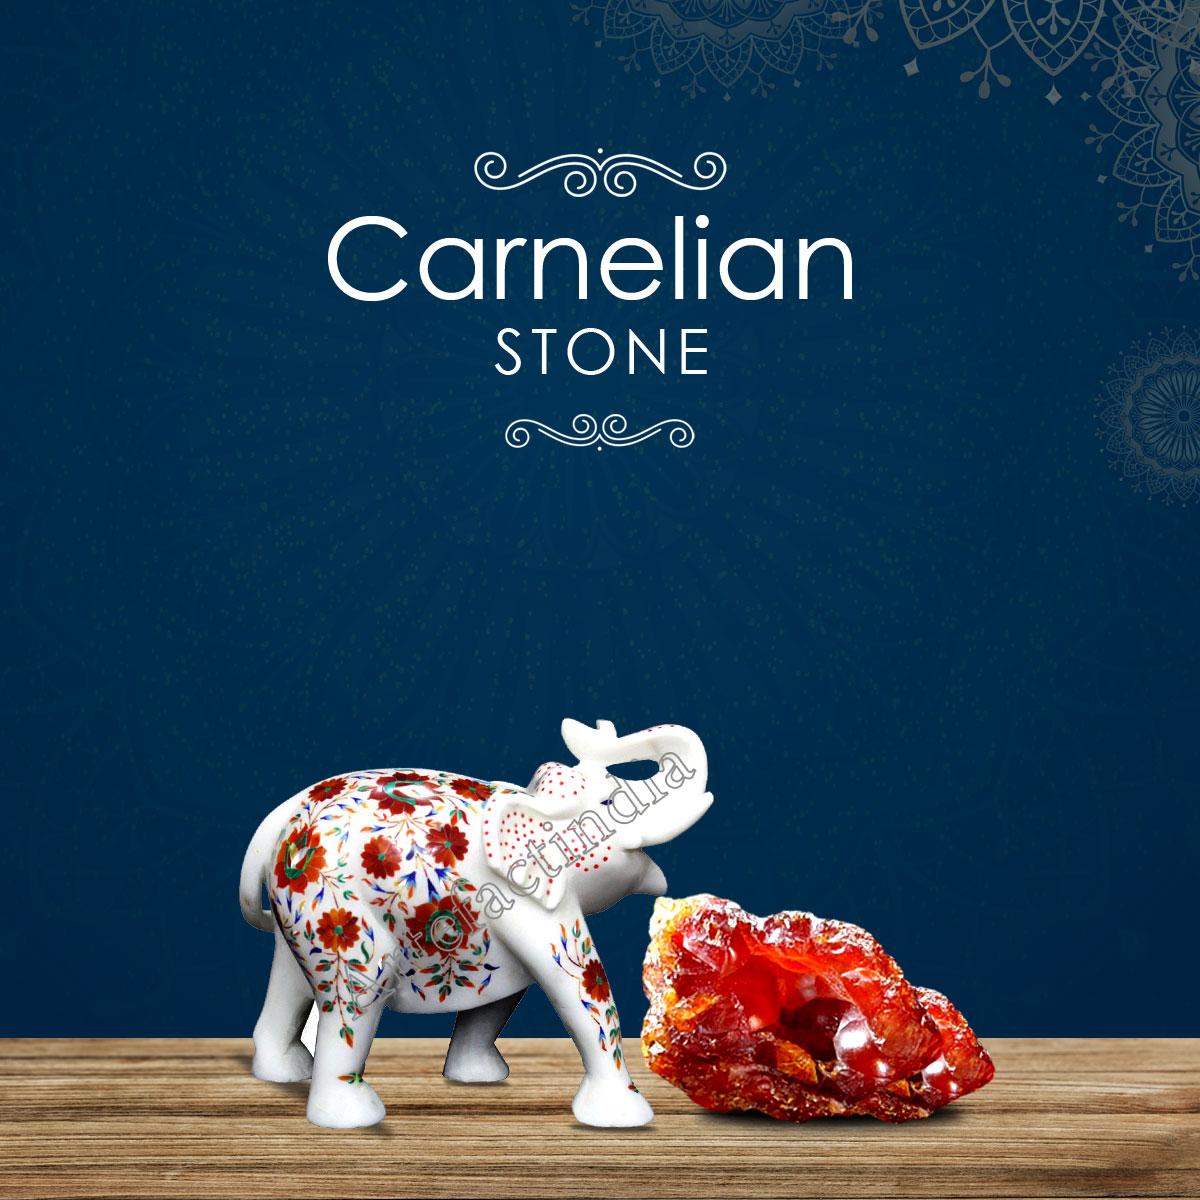 What is carnelian semi-precious stone marble